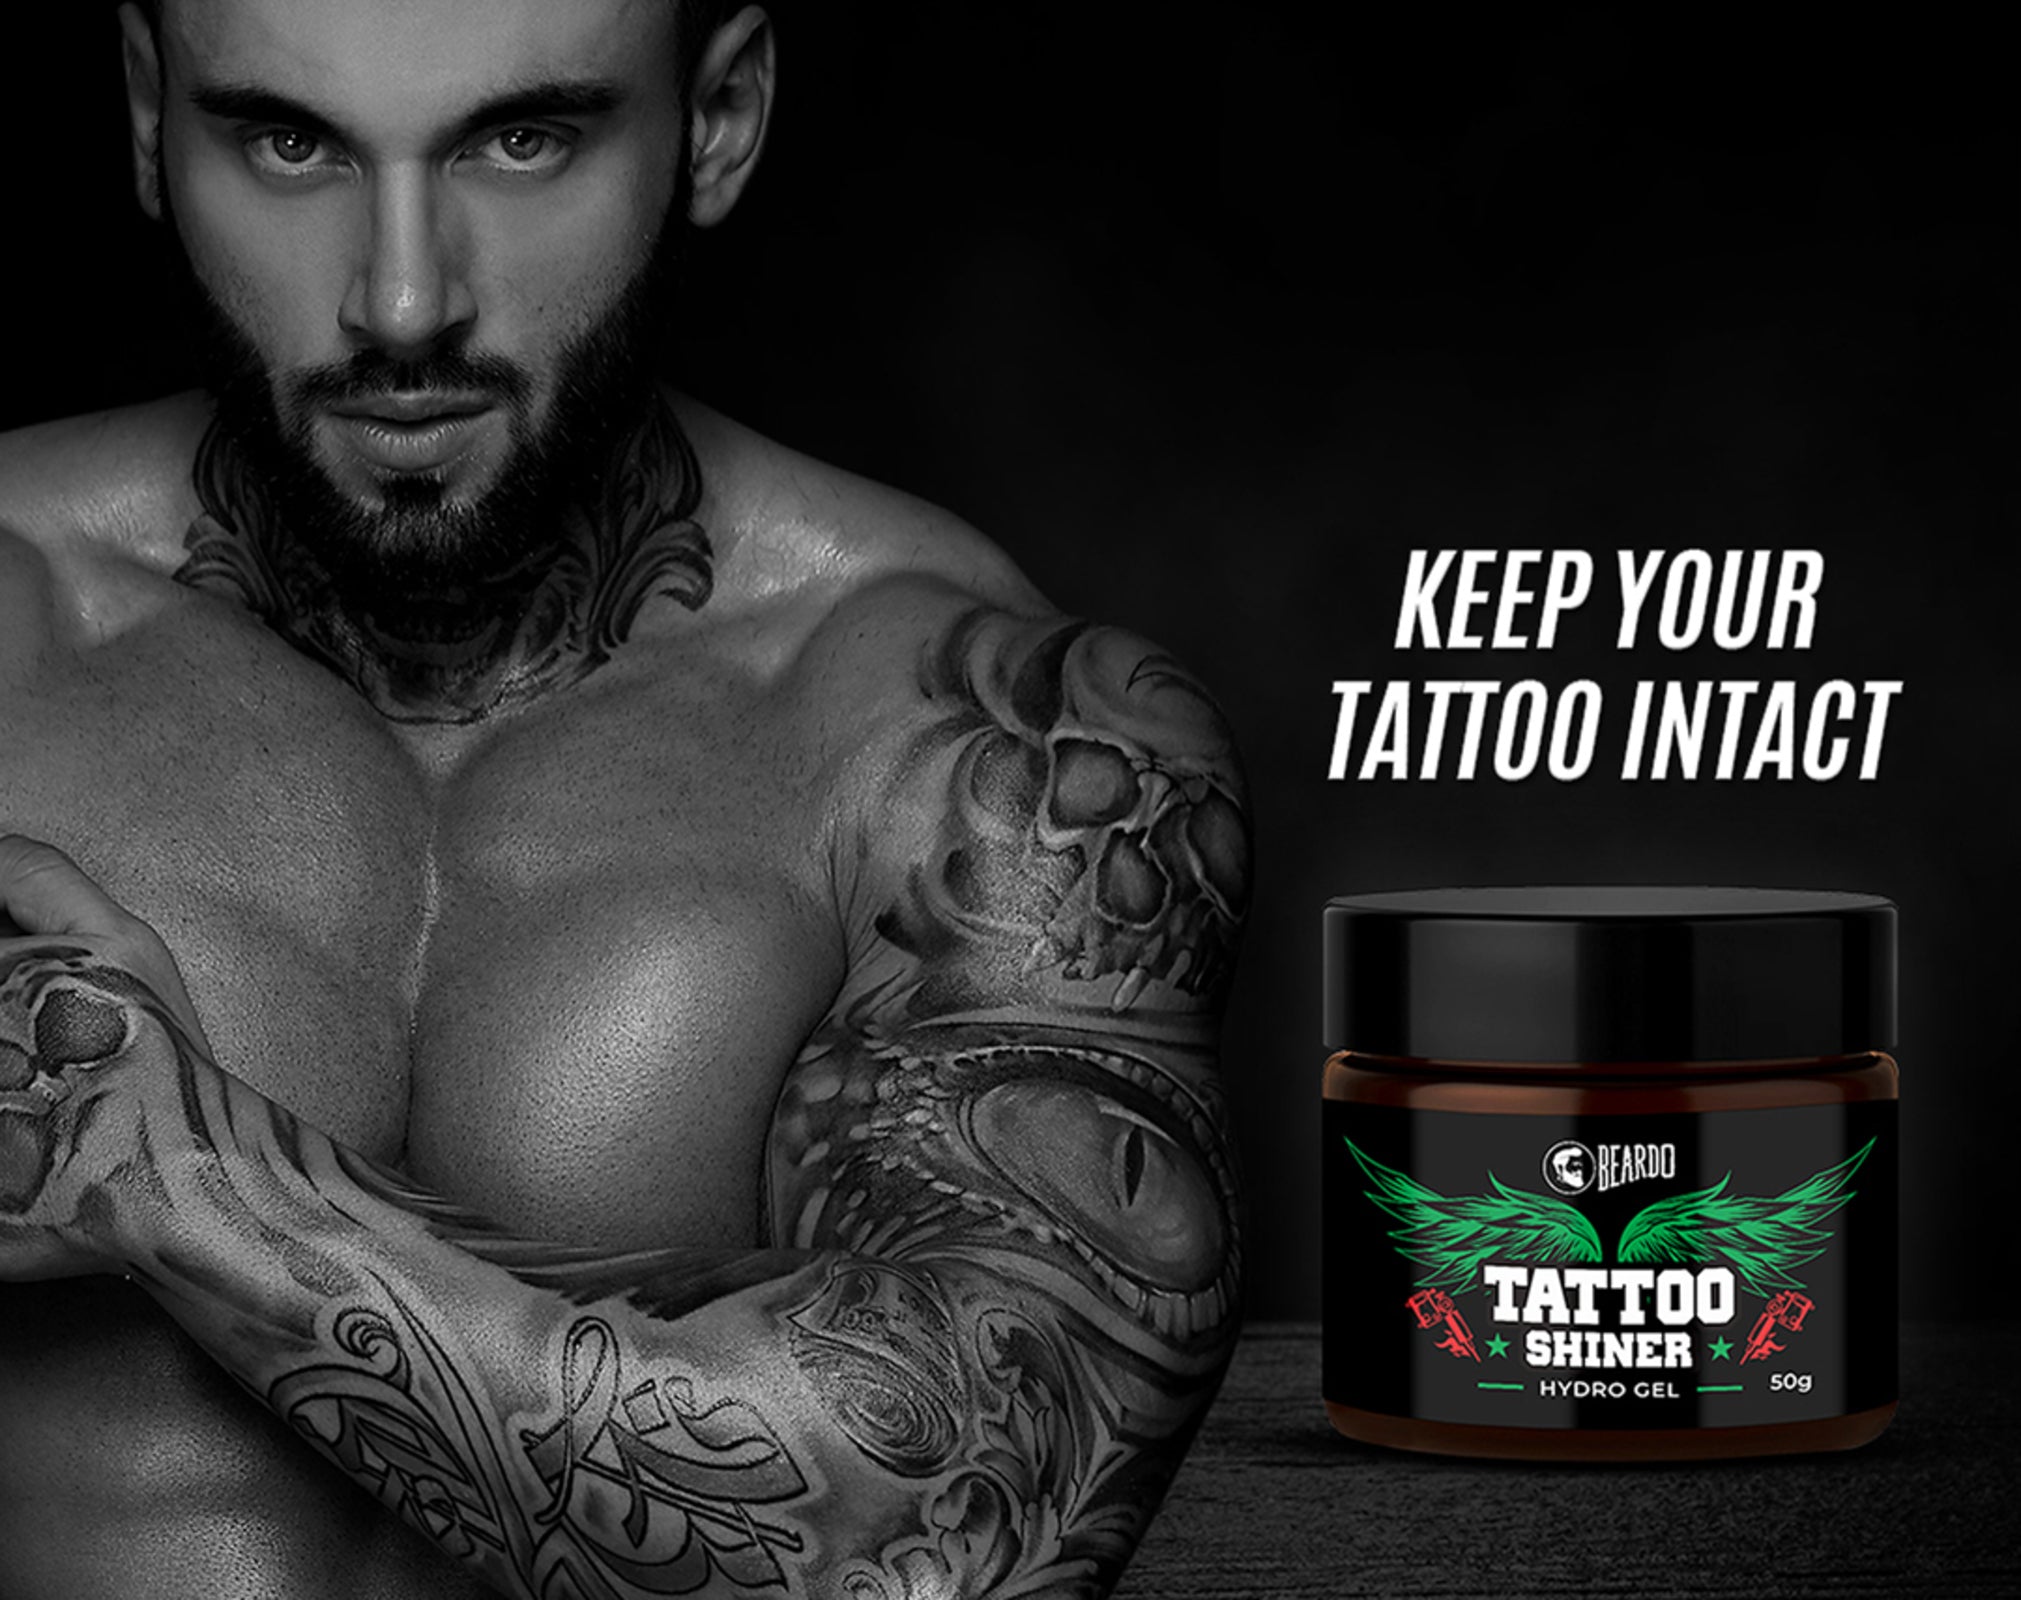 Beardo Tattoo Shiner Hydro Gel  Heals  Maintains Tattoo Ink  Tattoo  Shiner for Men  Brighten  Shine Tatoo for Men  50 g Pack of 2   Amazonin Beauty